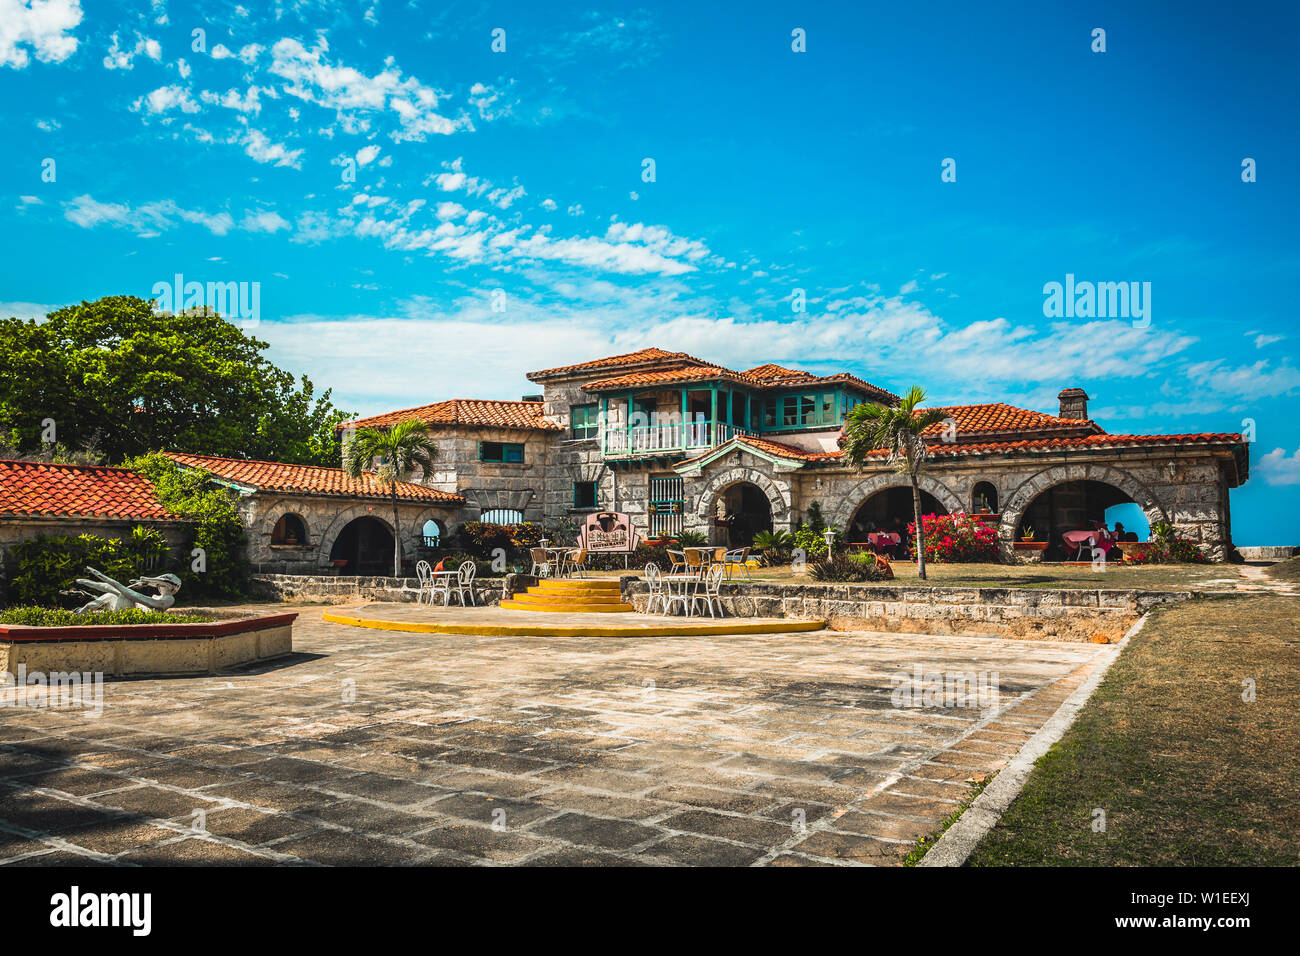 The restaurant Le Casa de Al and house of Al Capone, Varadero, Hicacos Peninsula, Matanzas Province, Cuba, West Indies, Central America Stock Photo